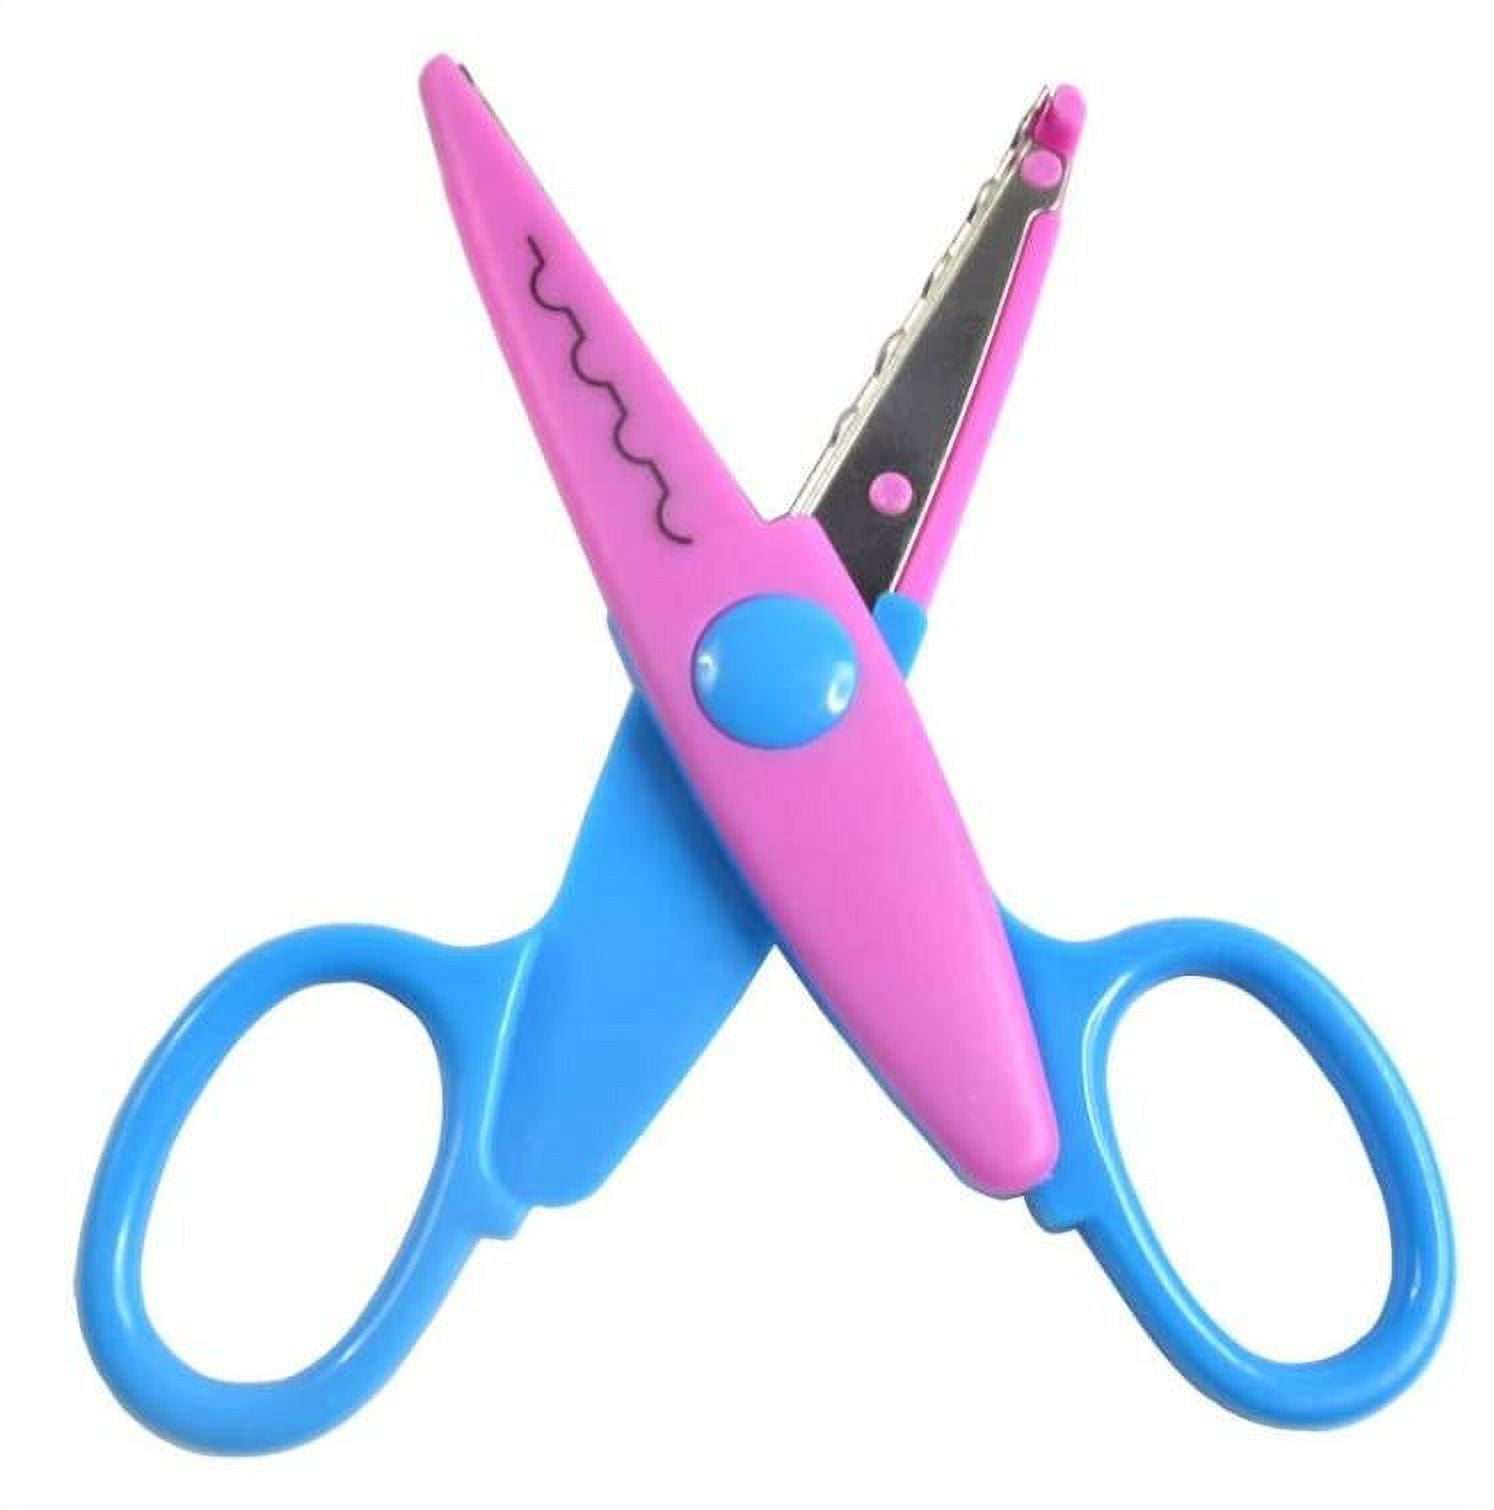 Kids Decorative Scissors | Set of 12 Different Patterns | 5.5 Inches |  Craft Scissors with Patterns, School Supplies